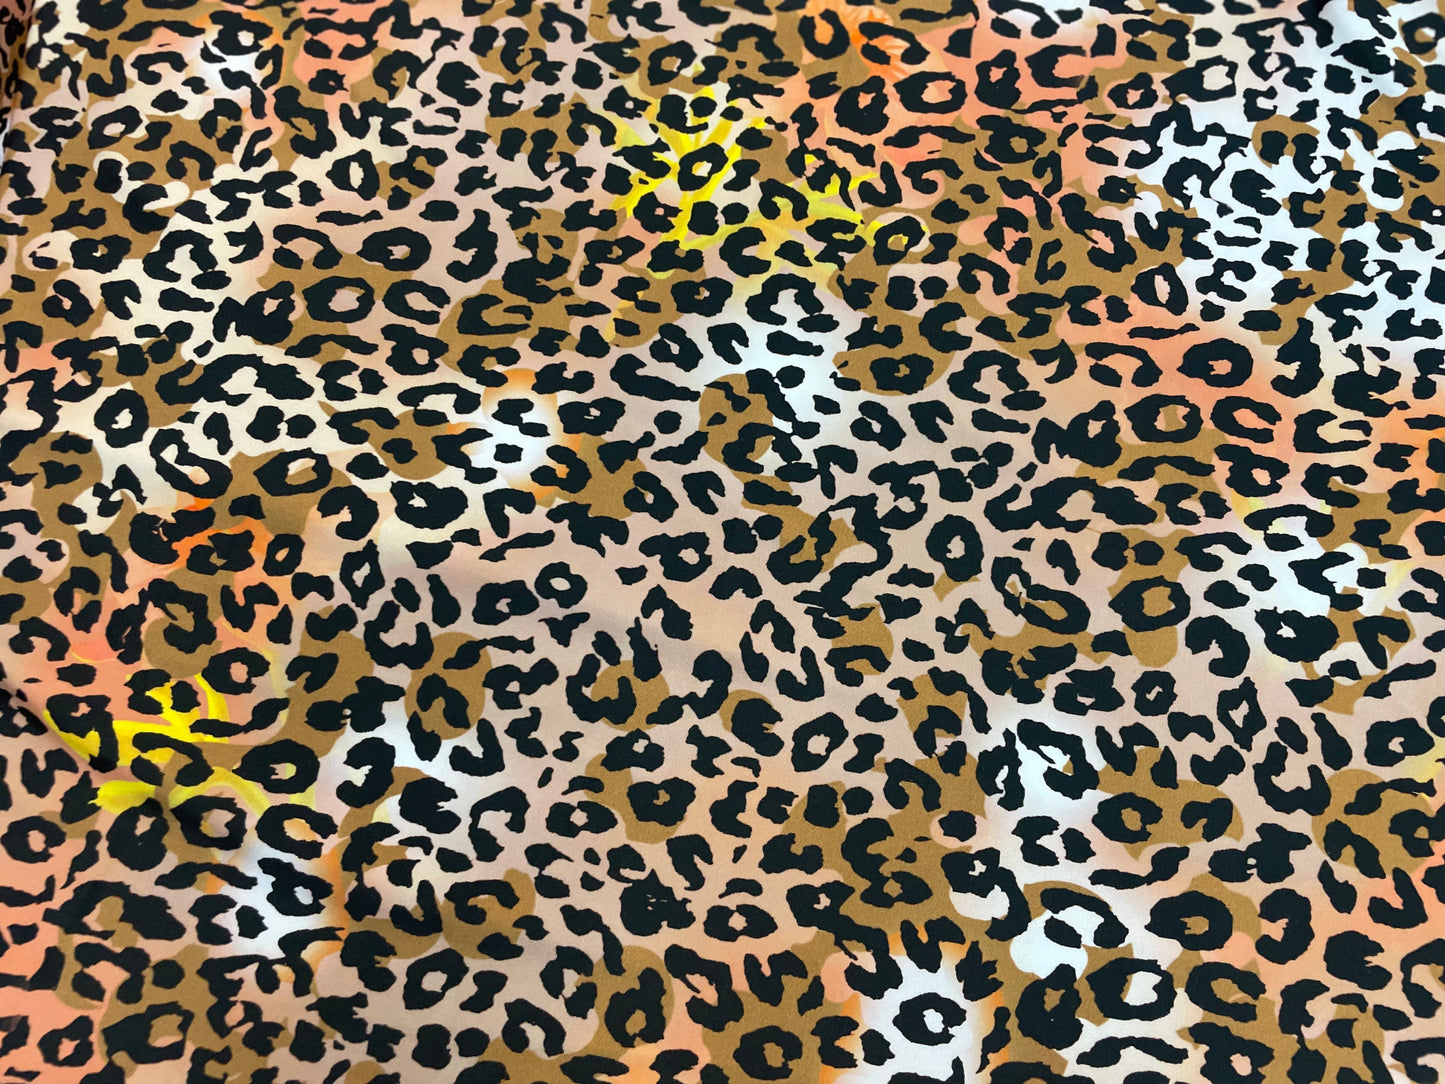 Leopard/Animal Print Poly Lycra - Brown/Peach/Black/Yellow